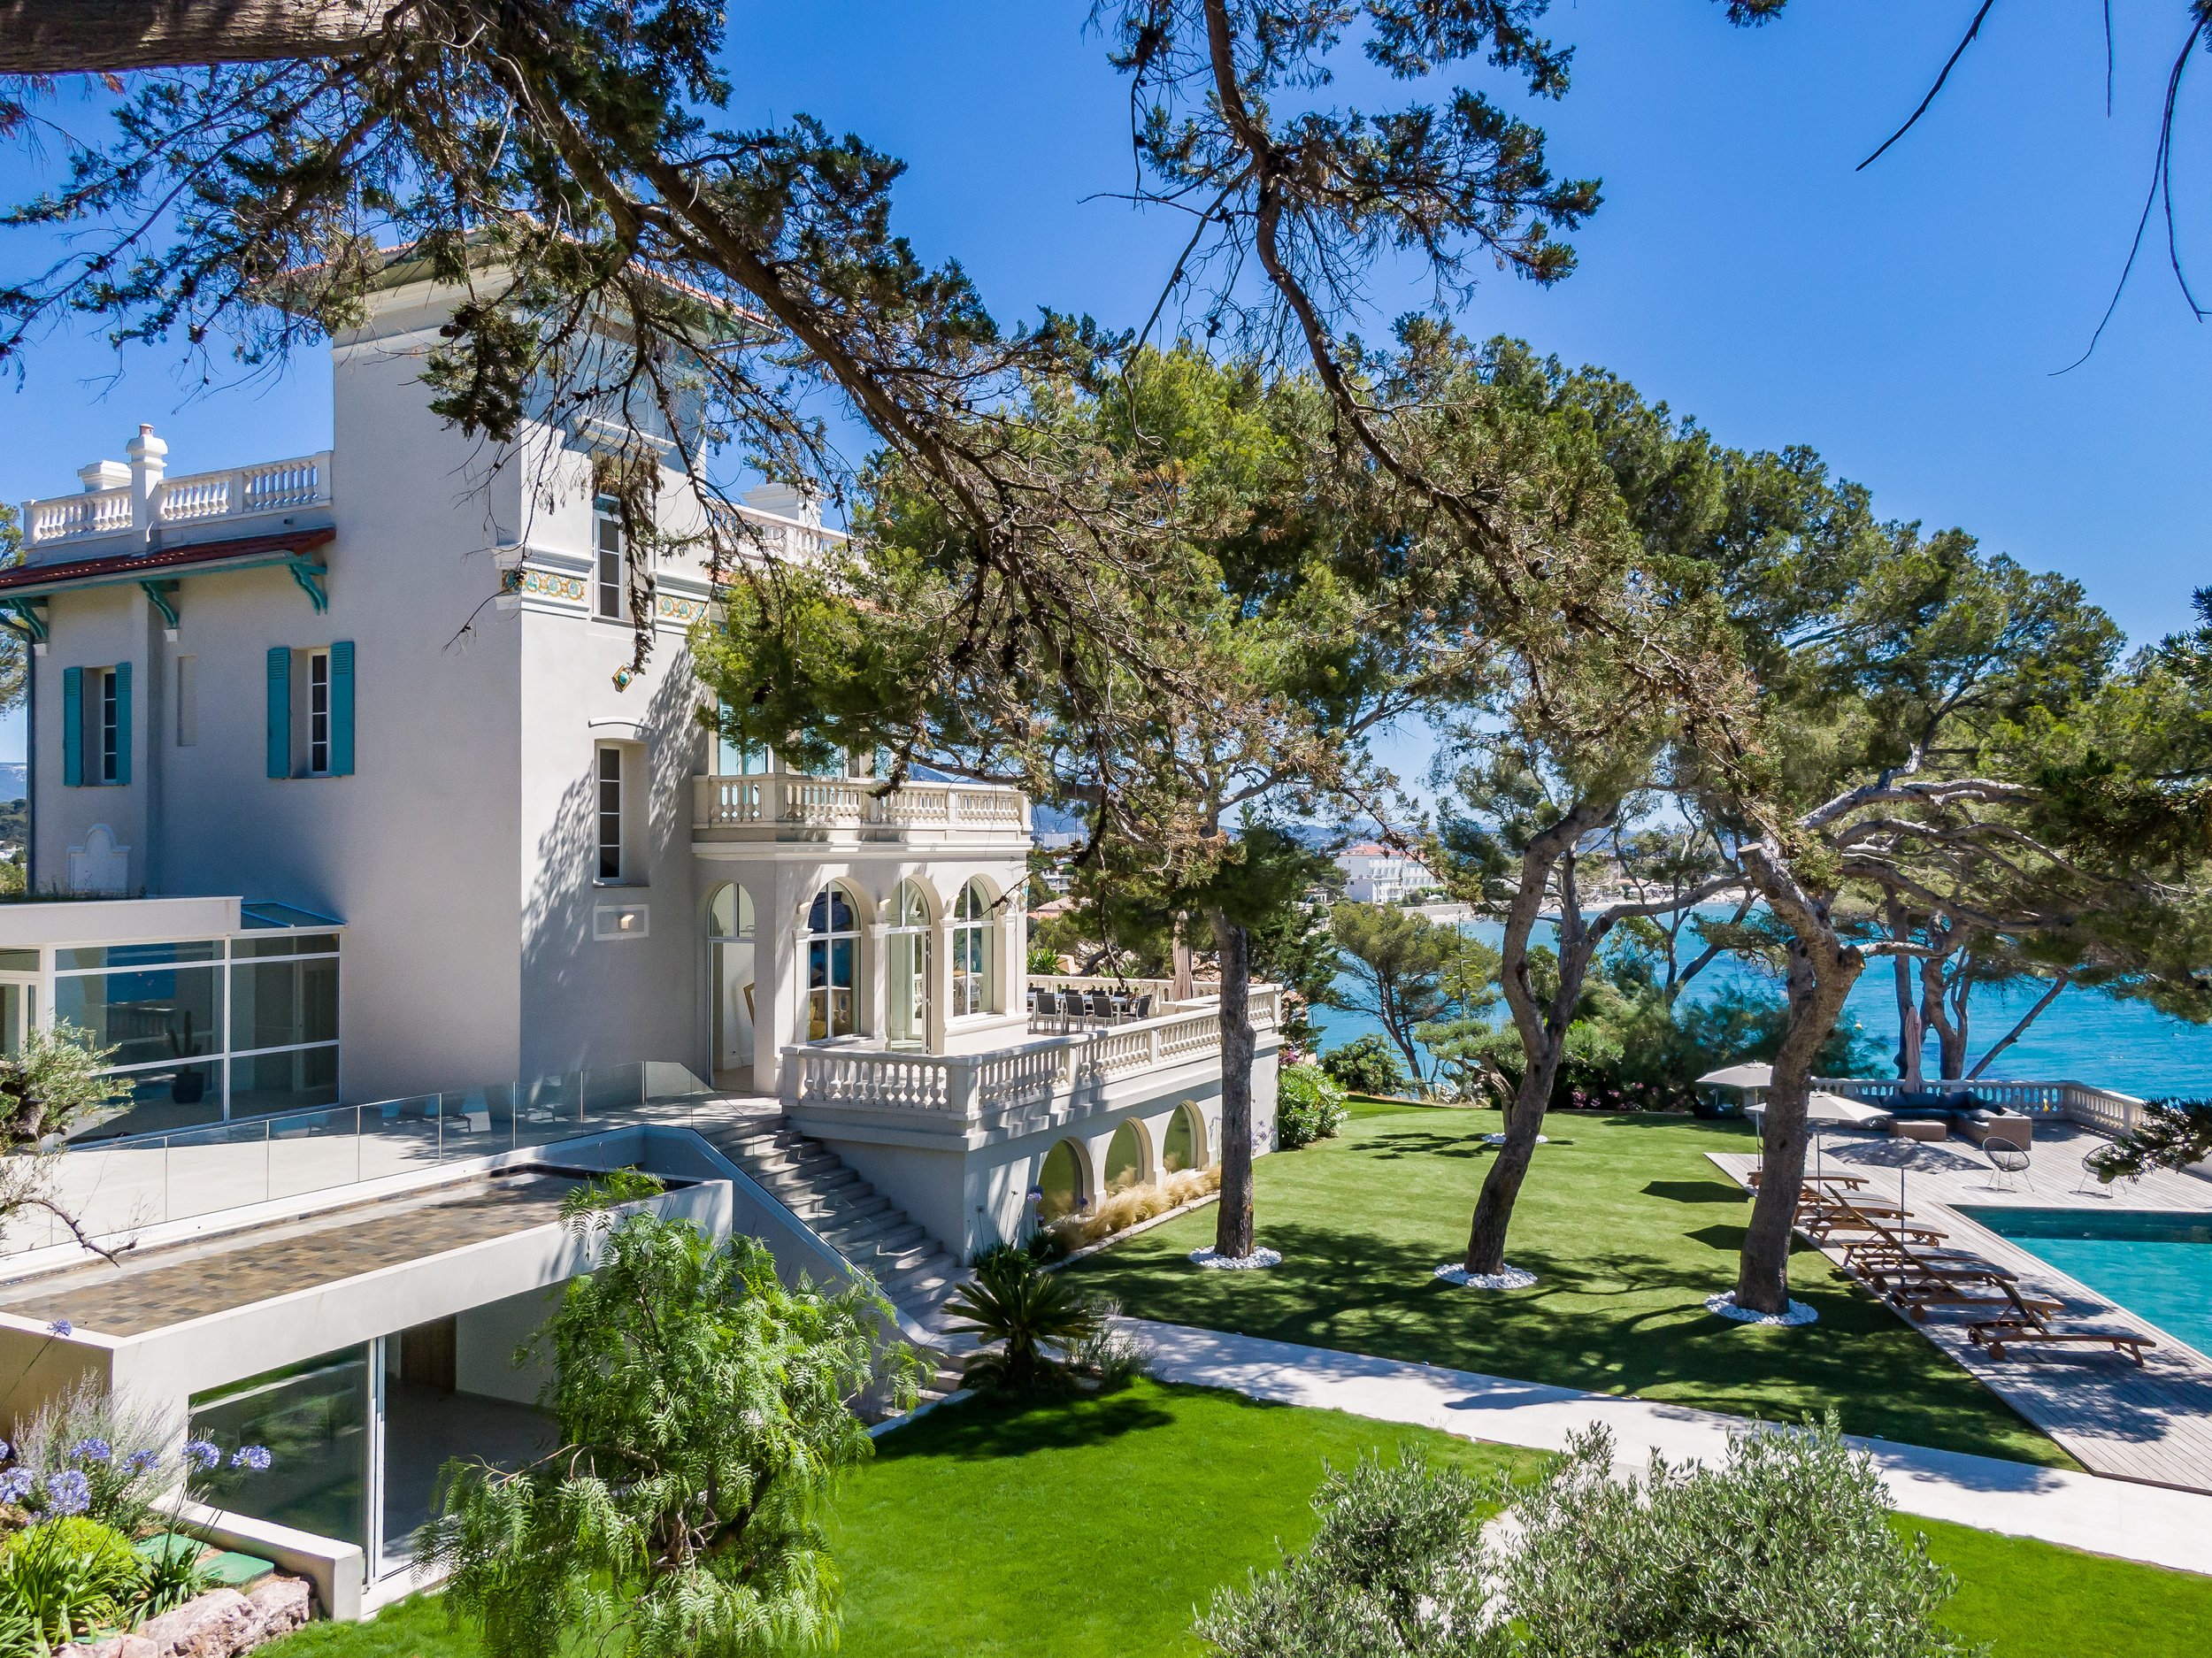 Luxury villa Homanie in Toulon to organize an incentive